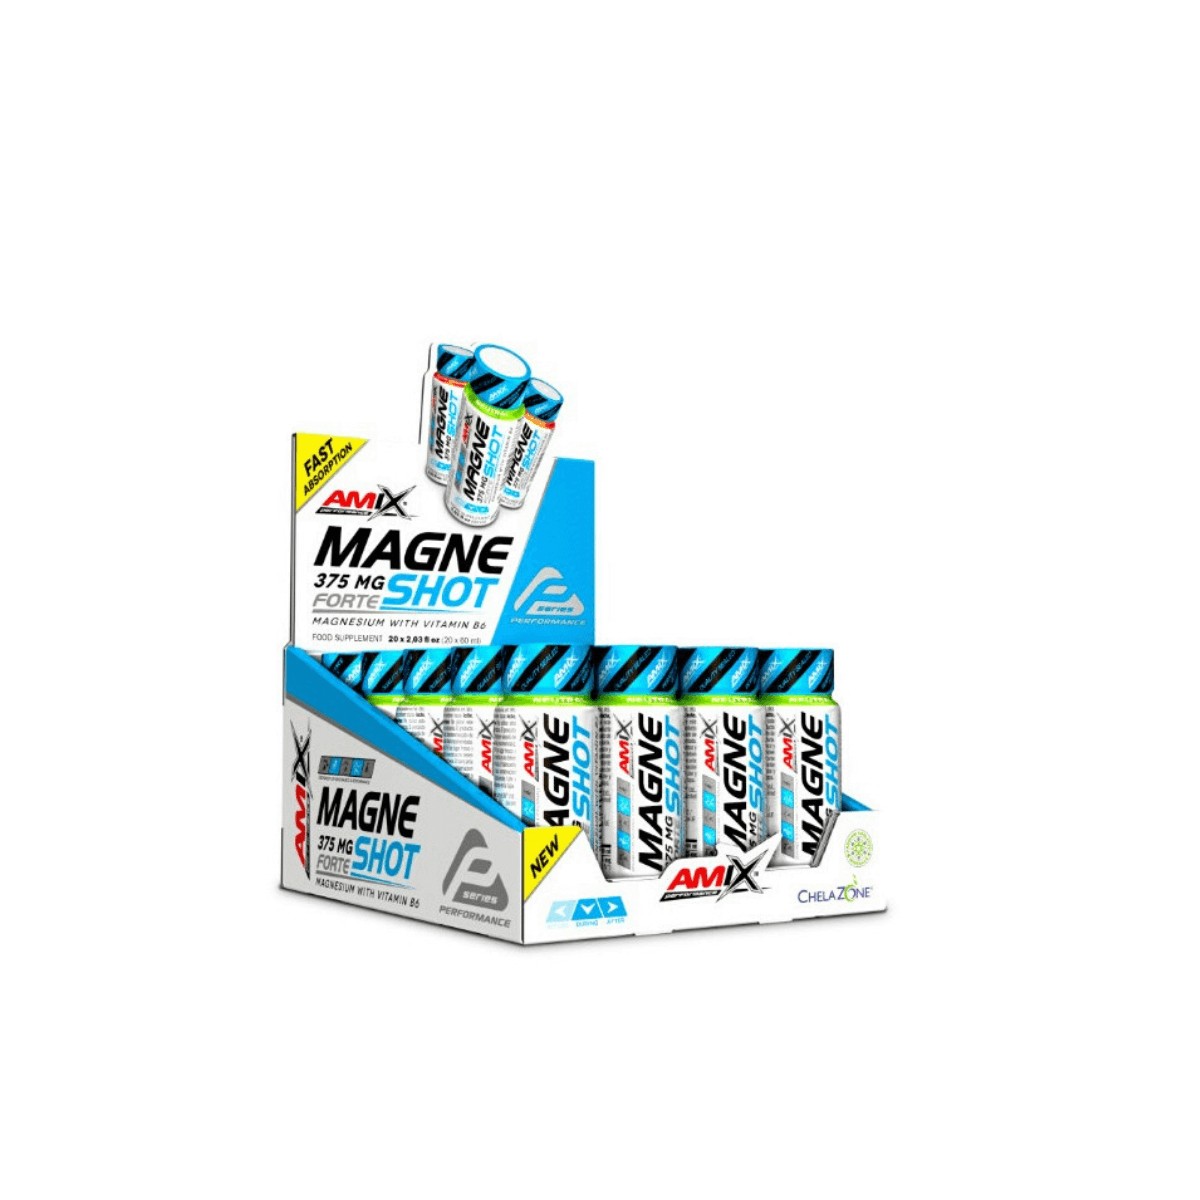 Aqua+Magnesium günstig Kaufen-AMIX MagneShot Forte Griff 1ud. AMIX MagneShot Forte Griff 1ud <![CDATA[AMIX MagneShot Forte 375 mg Mango AMIX Performance MagneShot Forte 375 mg ist ein neues Produkt AMIX PERFORMANCE, ein ultrakonzentriertes Magnesium, das eine Menge von 375 mg Magnesiu